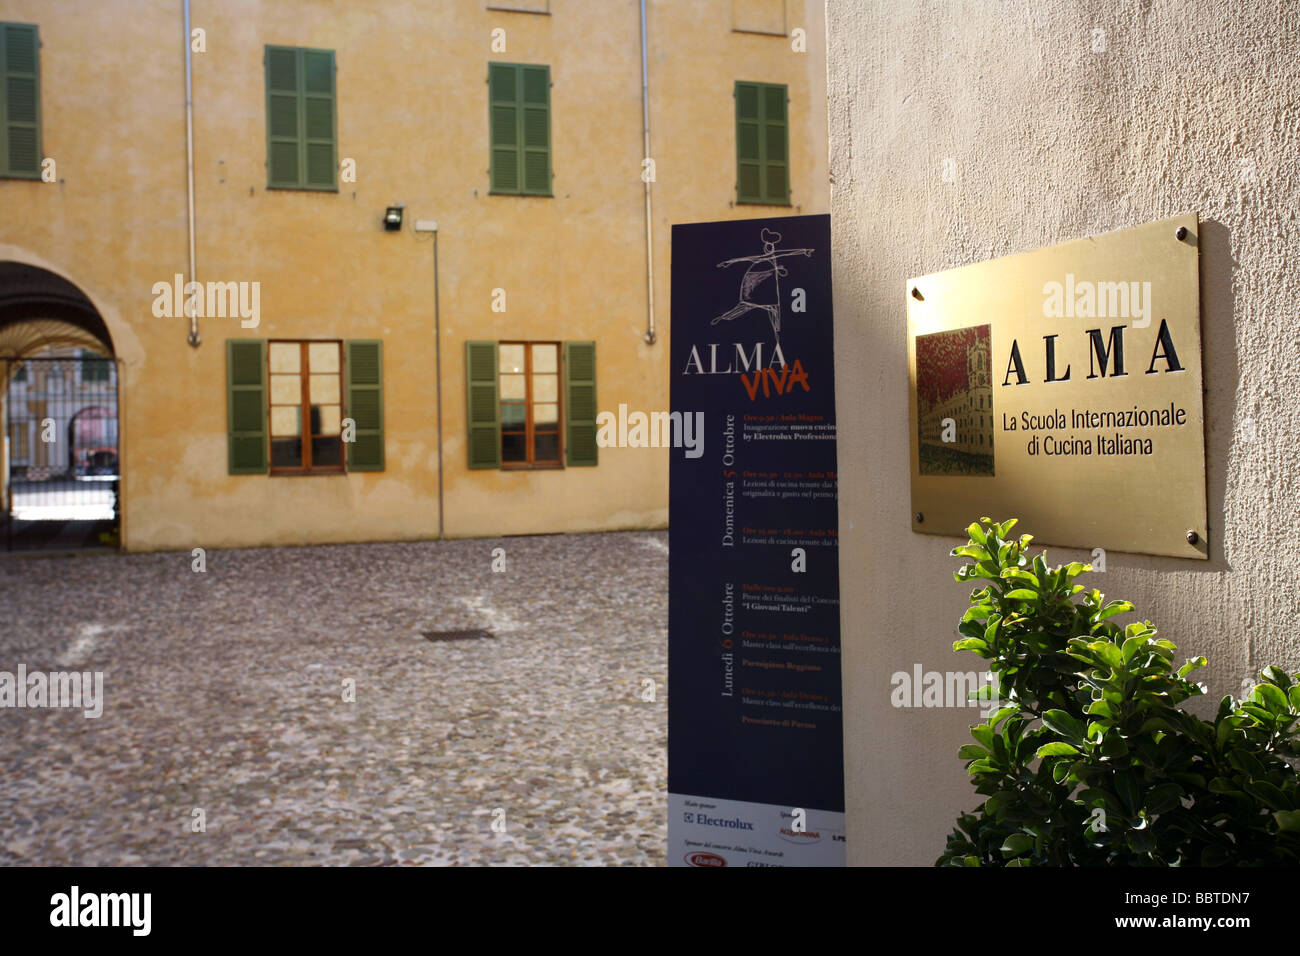 The Ducal Palace of or Reggia di Colorno, ALMA, a world renowned Italian culinary school, Colorno, Parma, Emilia Romagna, Italy Stock Photo